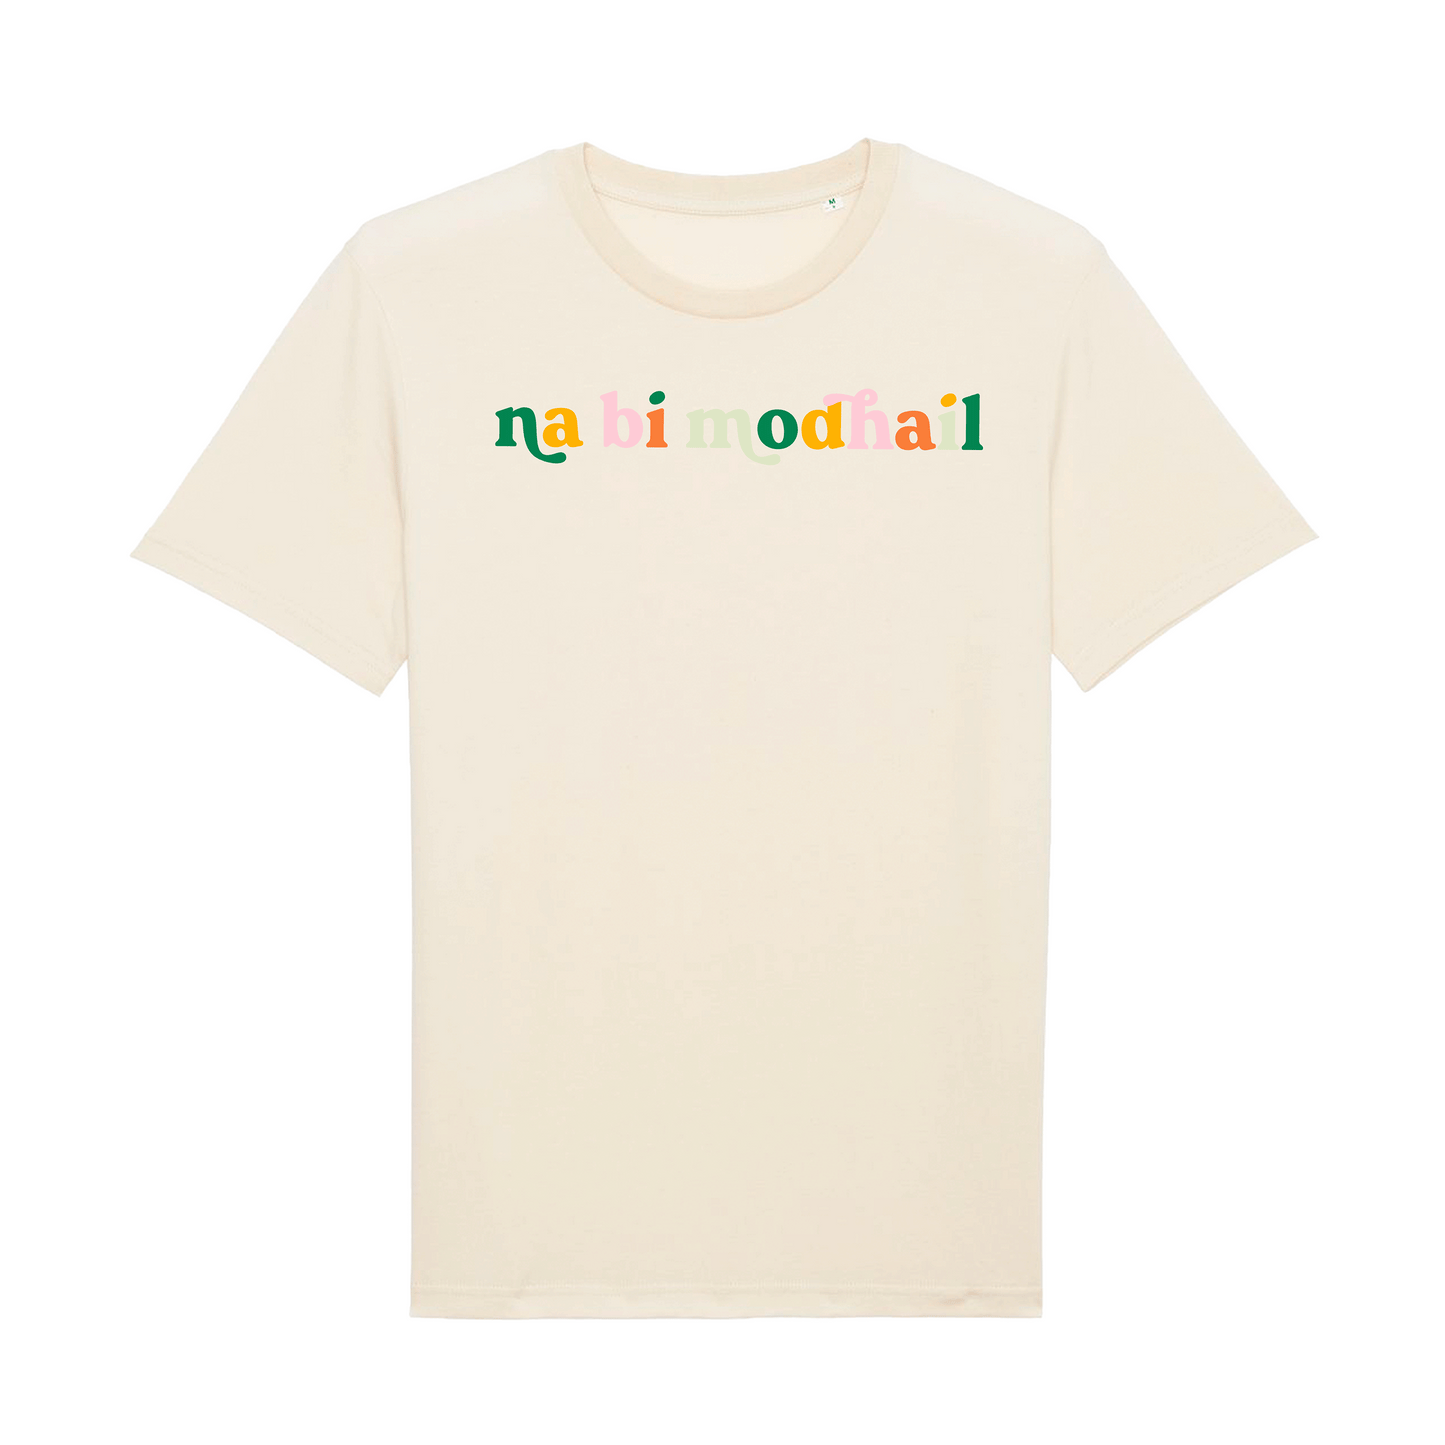 ✨bragail✨ na bi modhail embroidered t-shirt // PREORDER